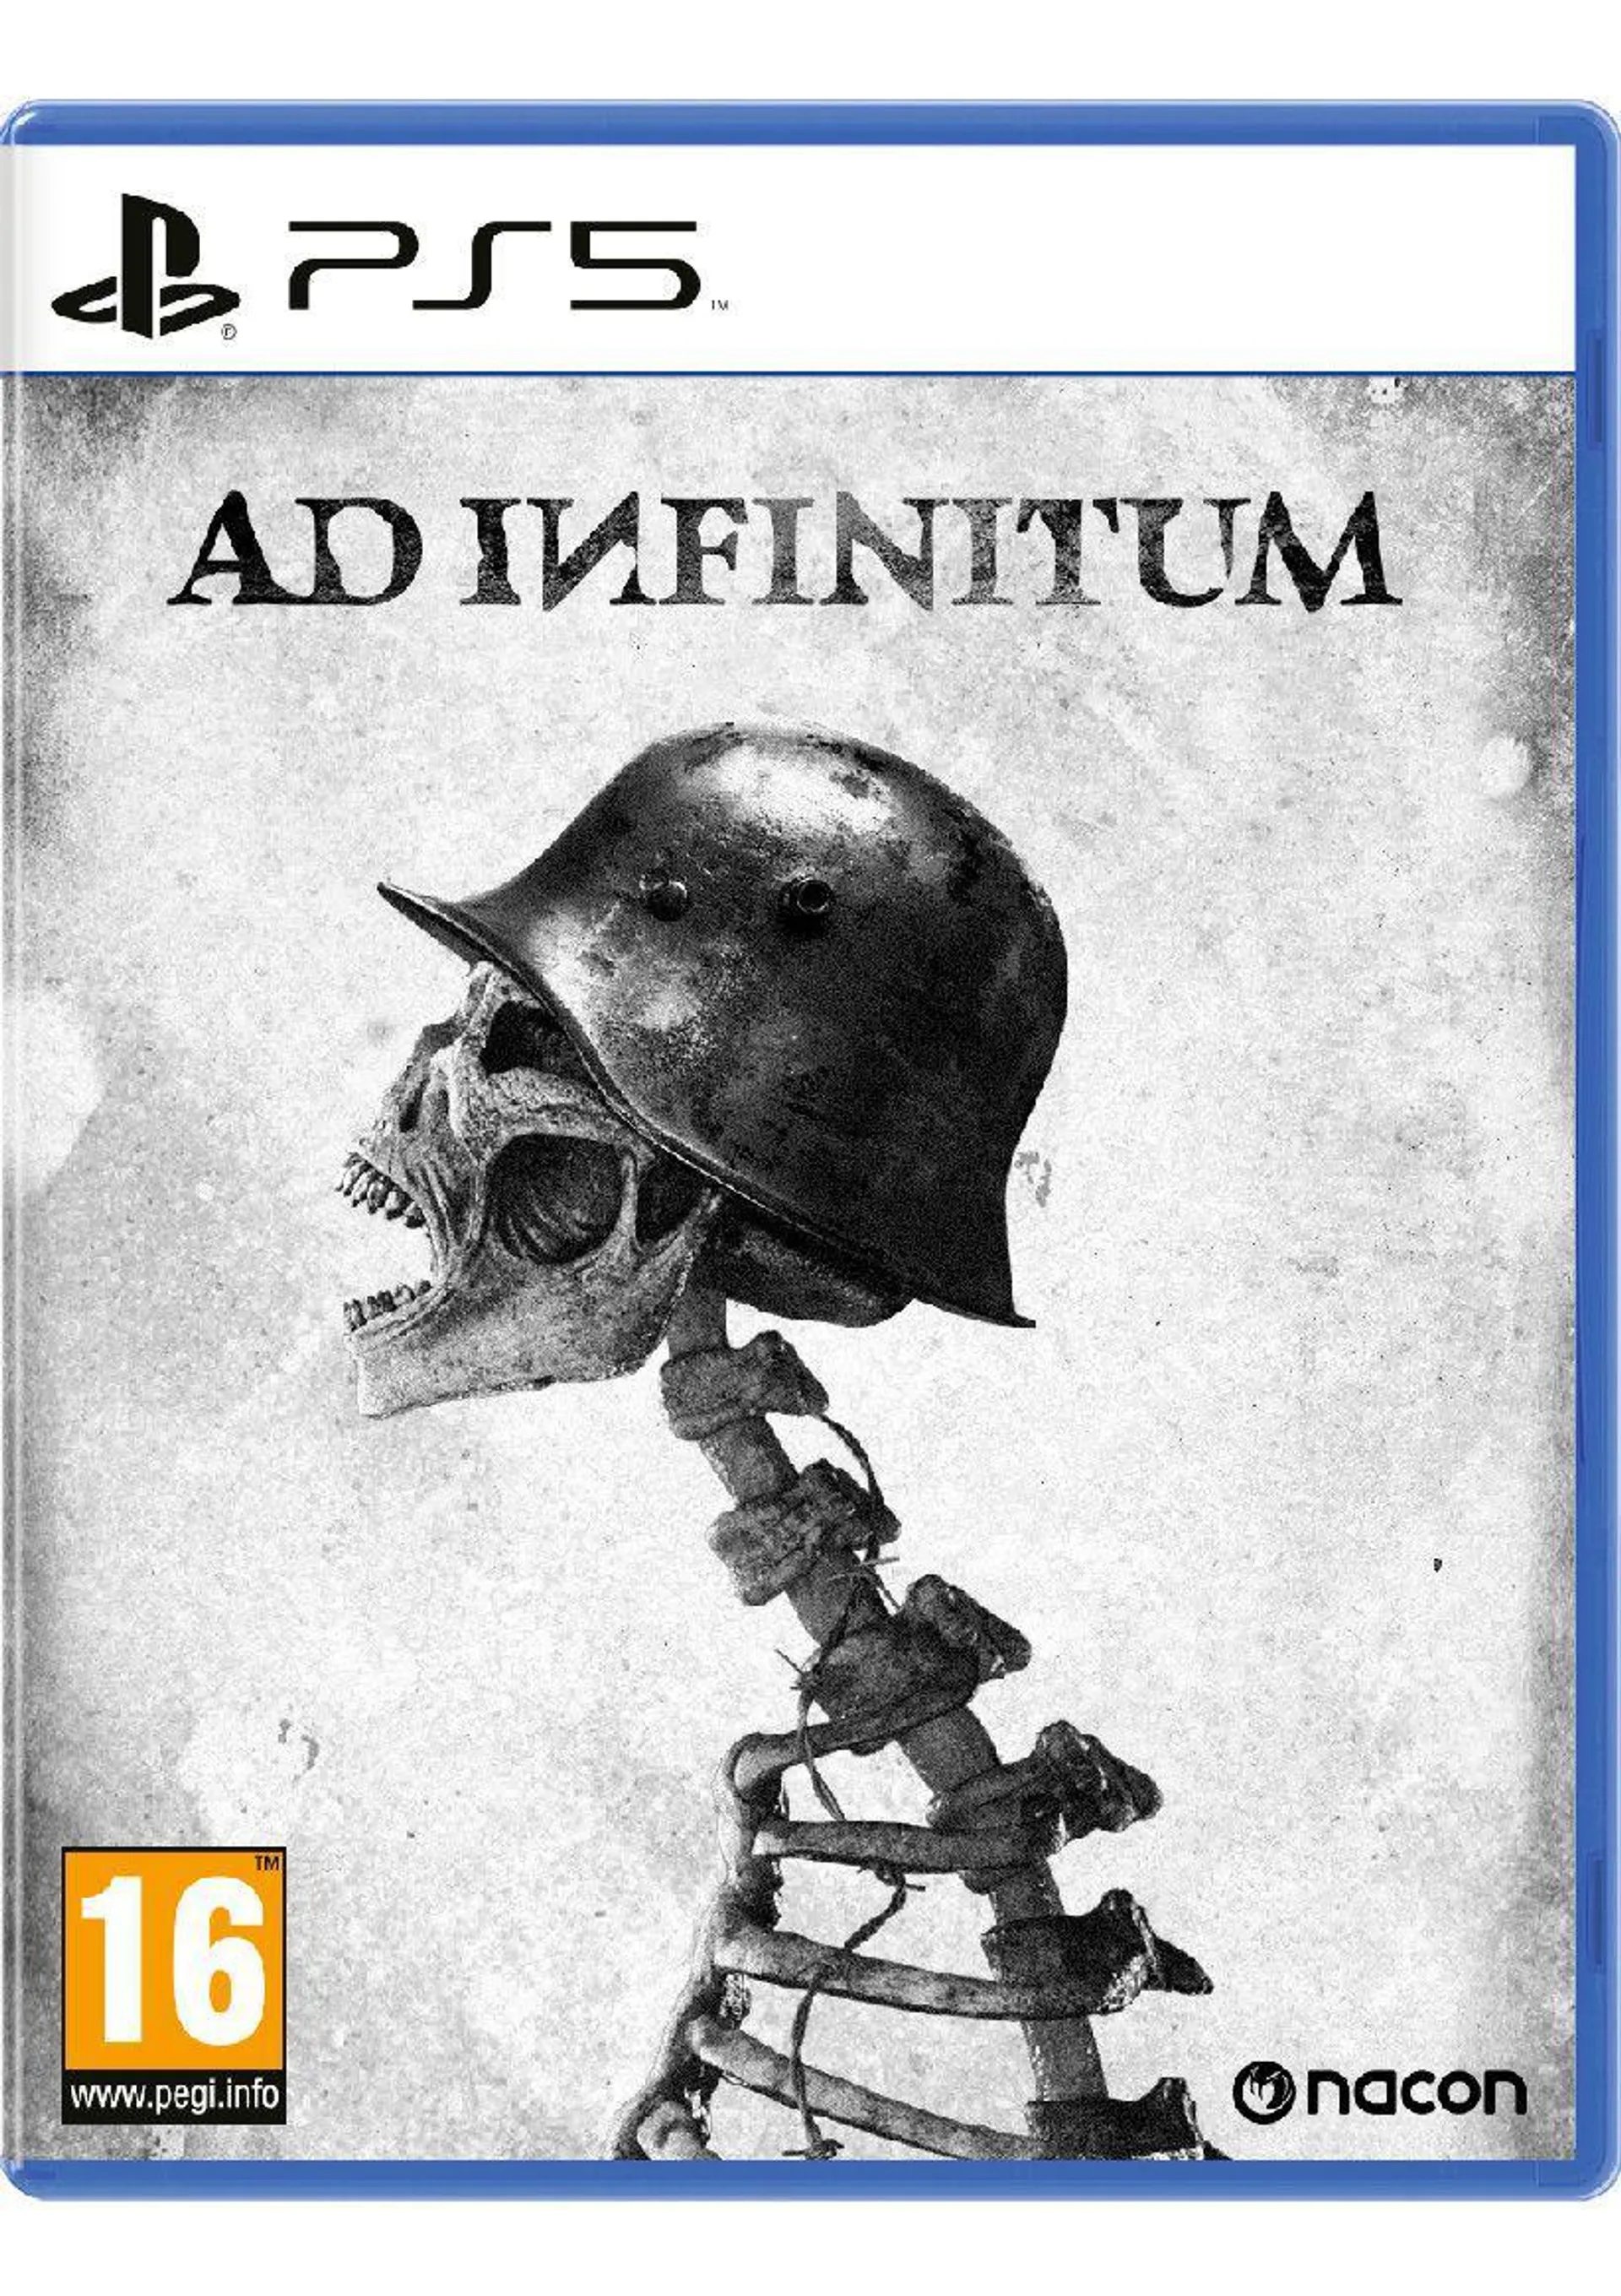 Ad Infinitum on PlayStation 5